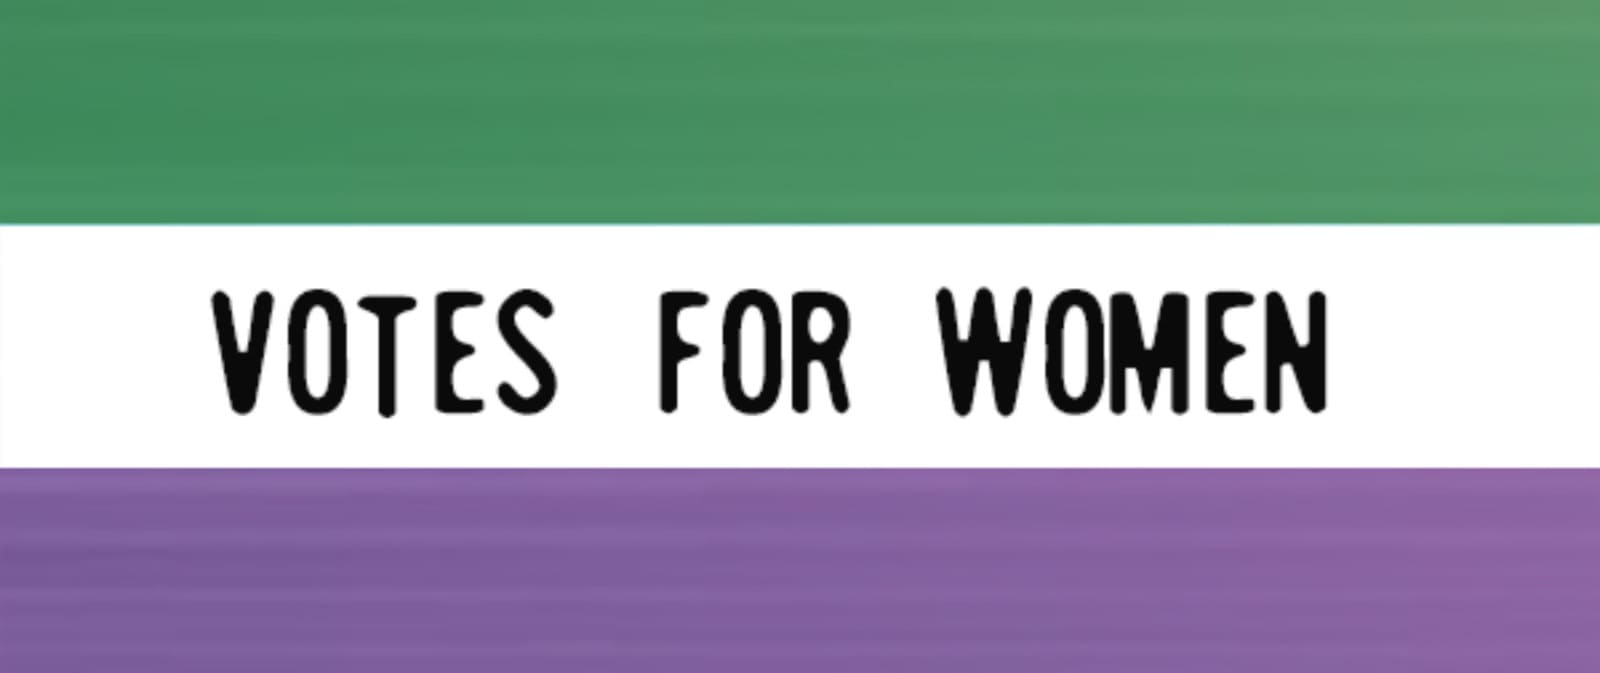 slogan des suffragettes votes for women